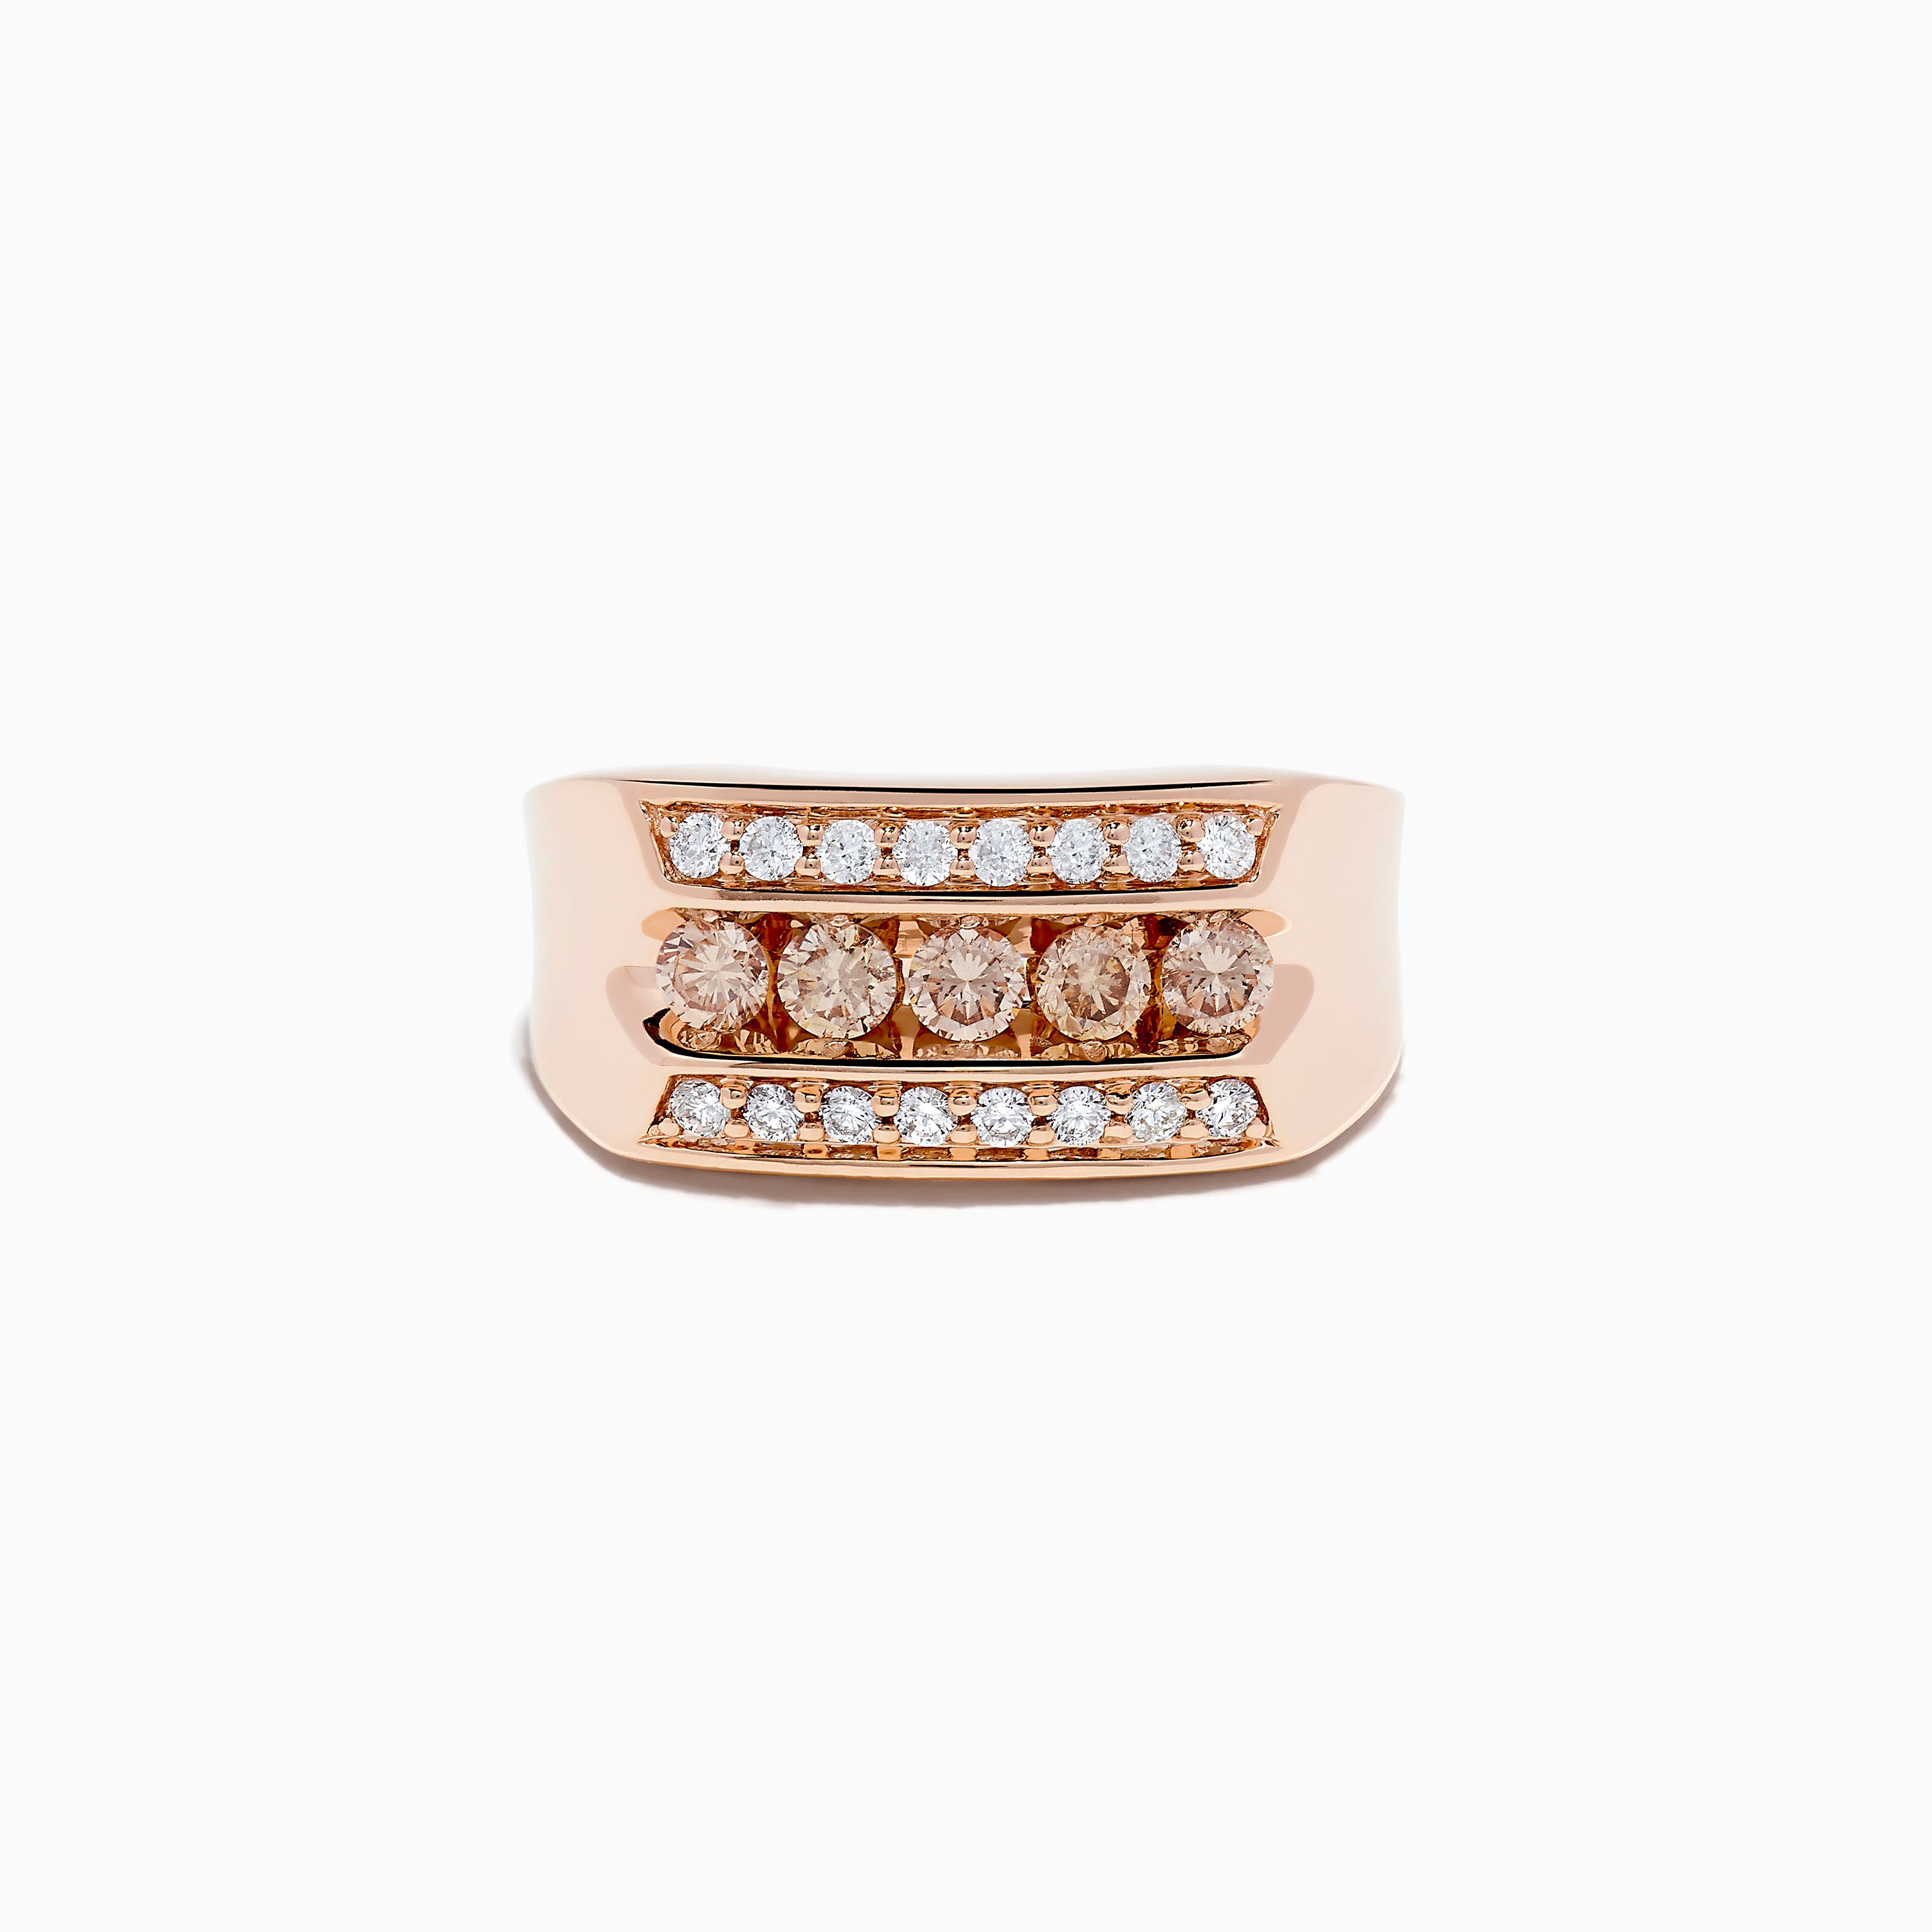 Effy Diamond Ring In 14k Rose Gold. For Sale at 1stDibs